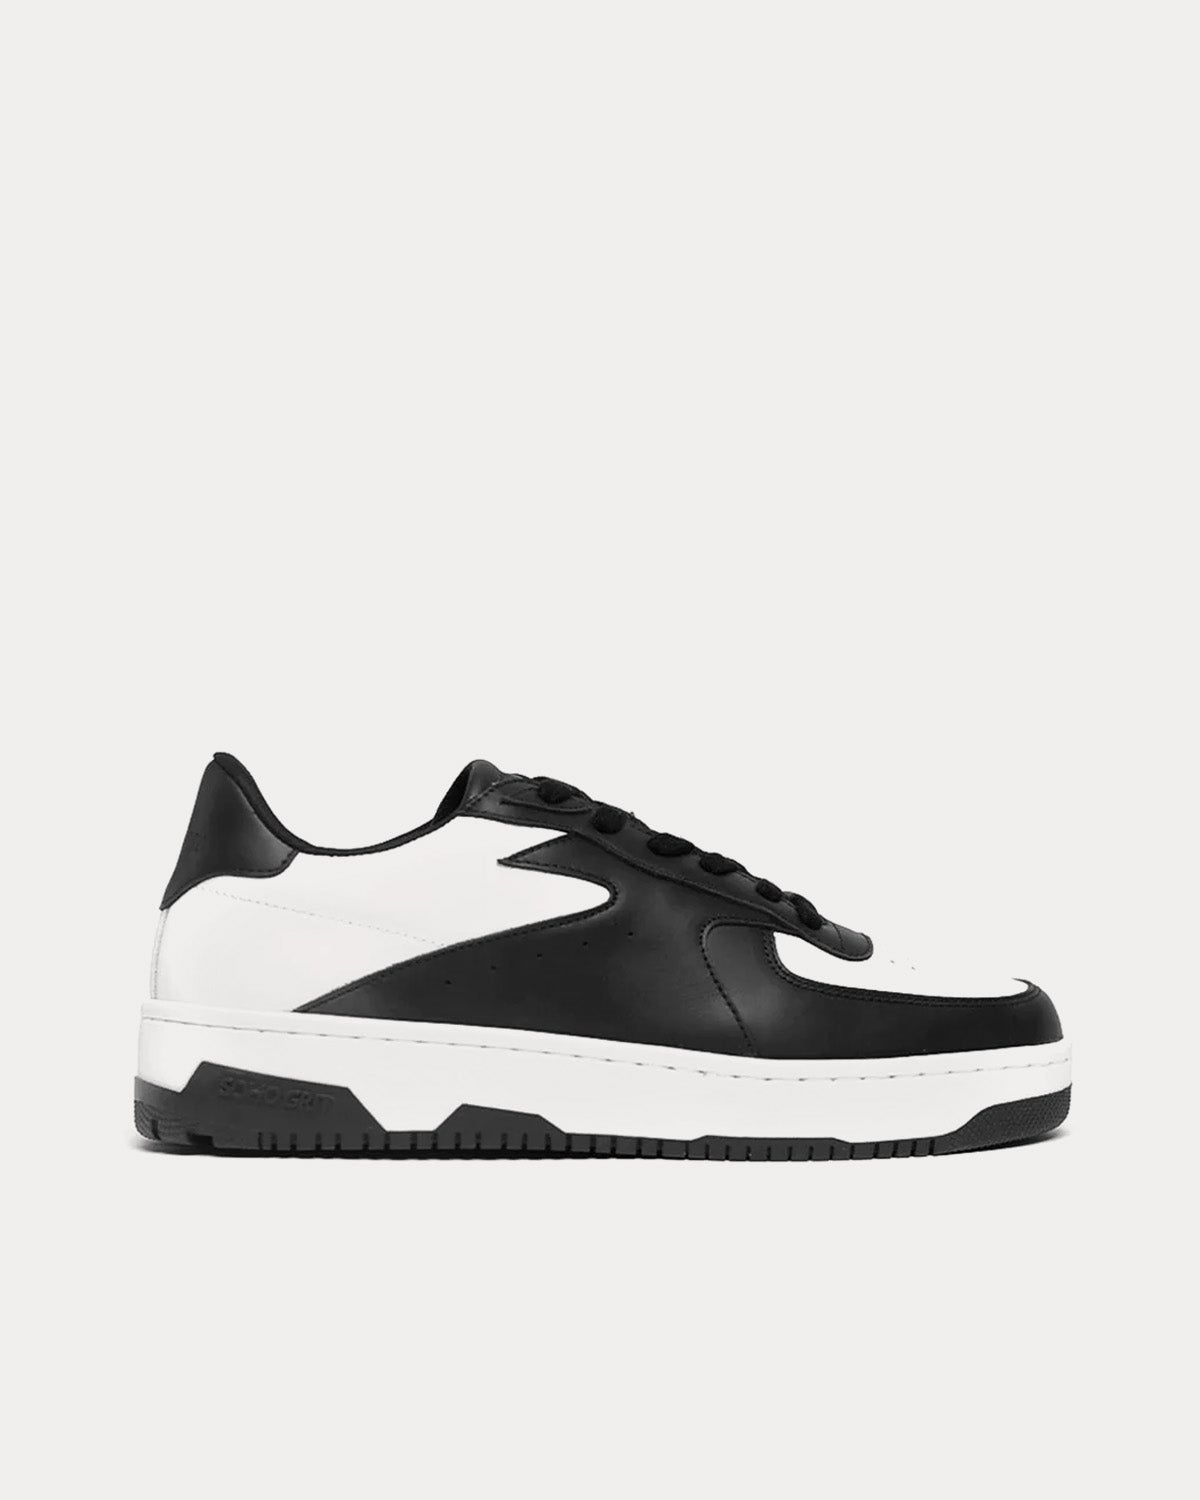 Soho Grit - Crosby Black / White Low Top Sneakers